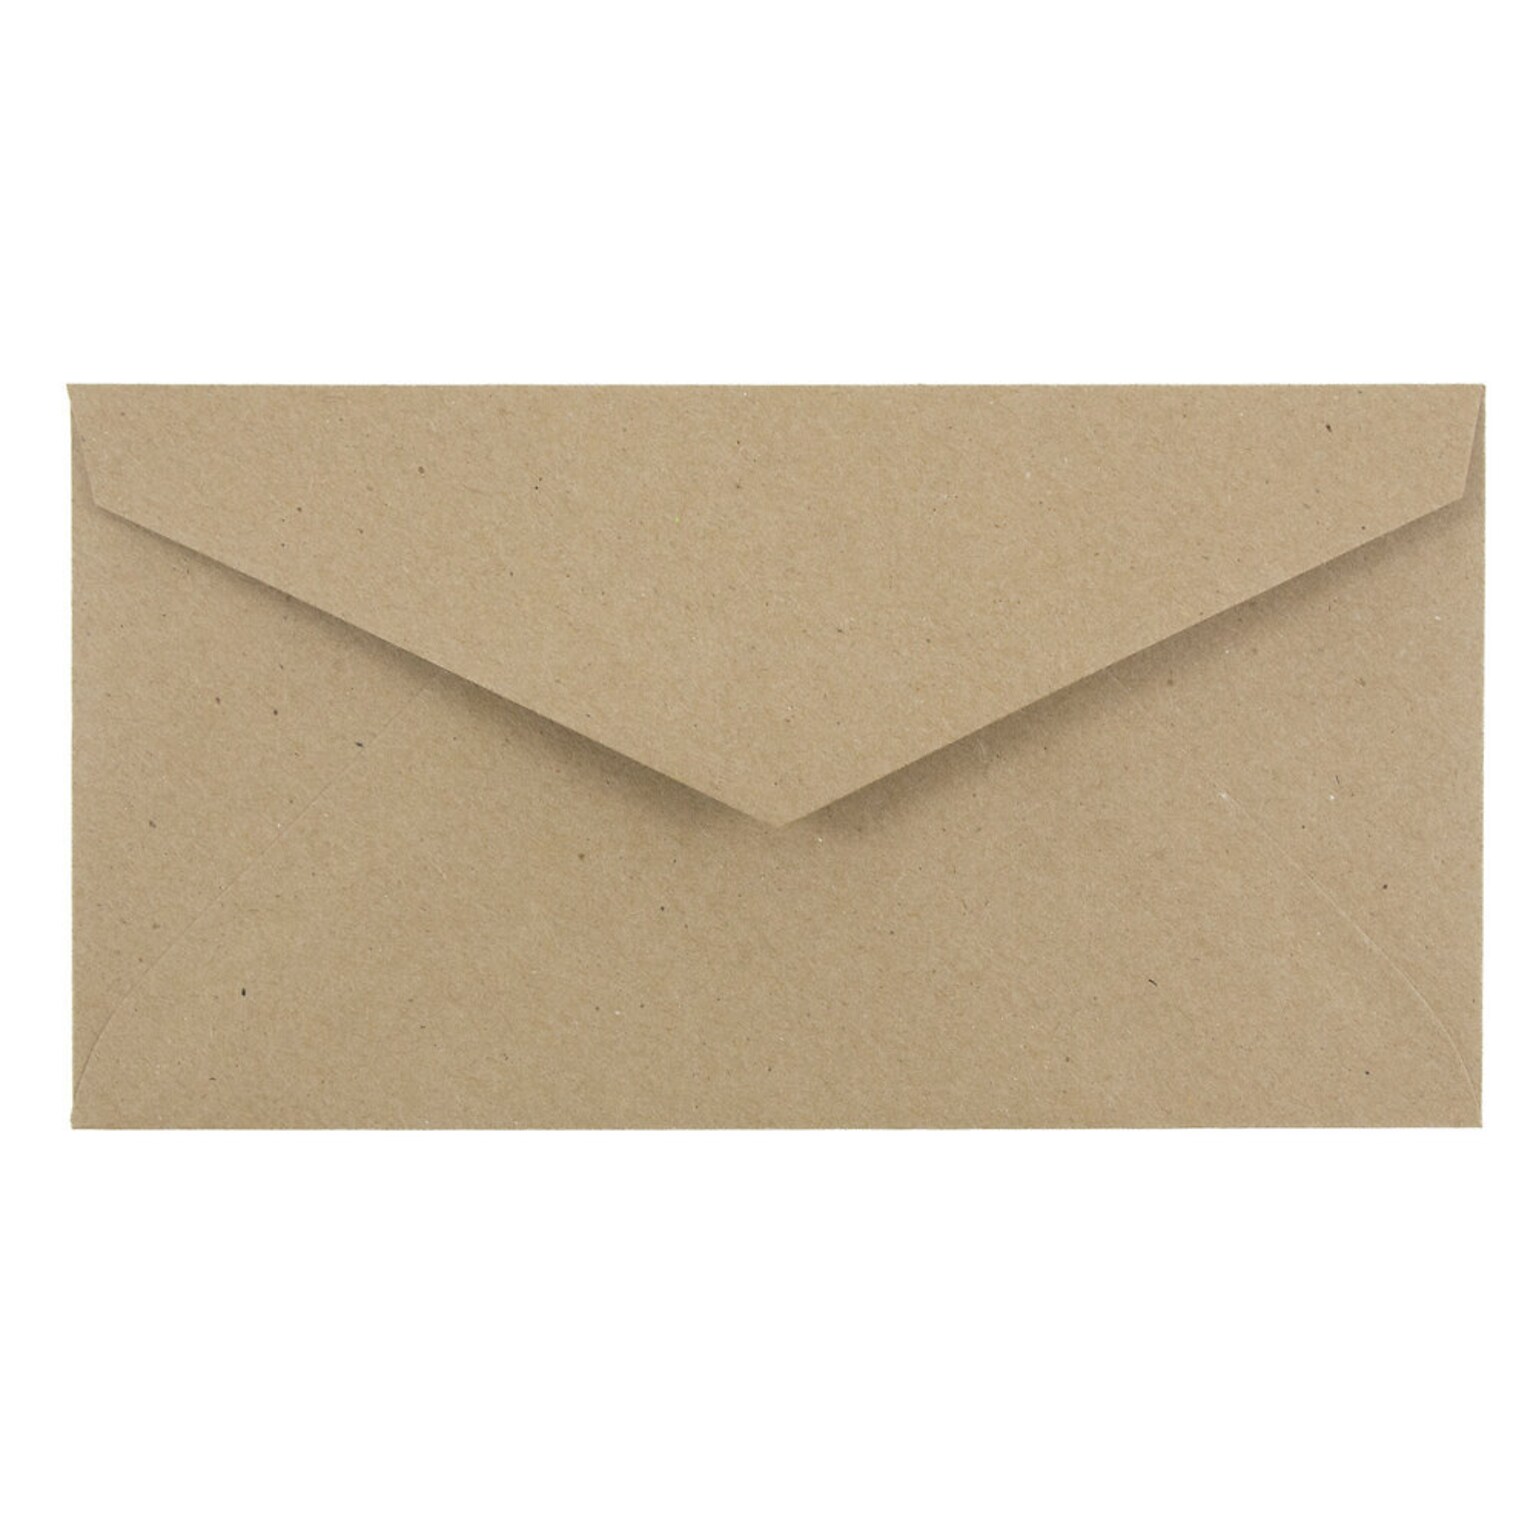 JAM Paper Monarch Open End Invitation Envelope, 3 7/8 x 7 1/2, Brown Kraft, 50/Pack (36317567I)